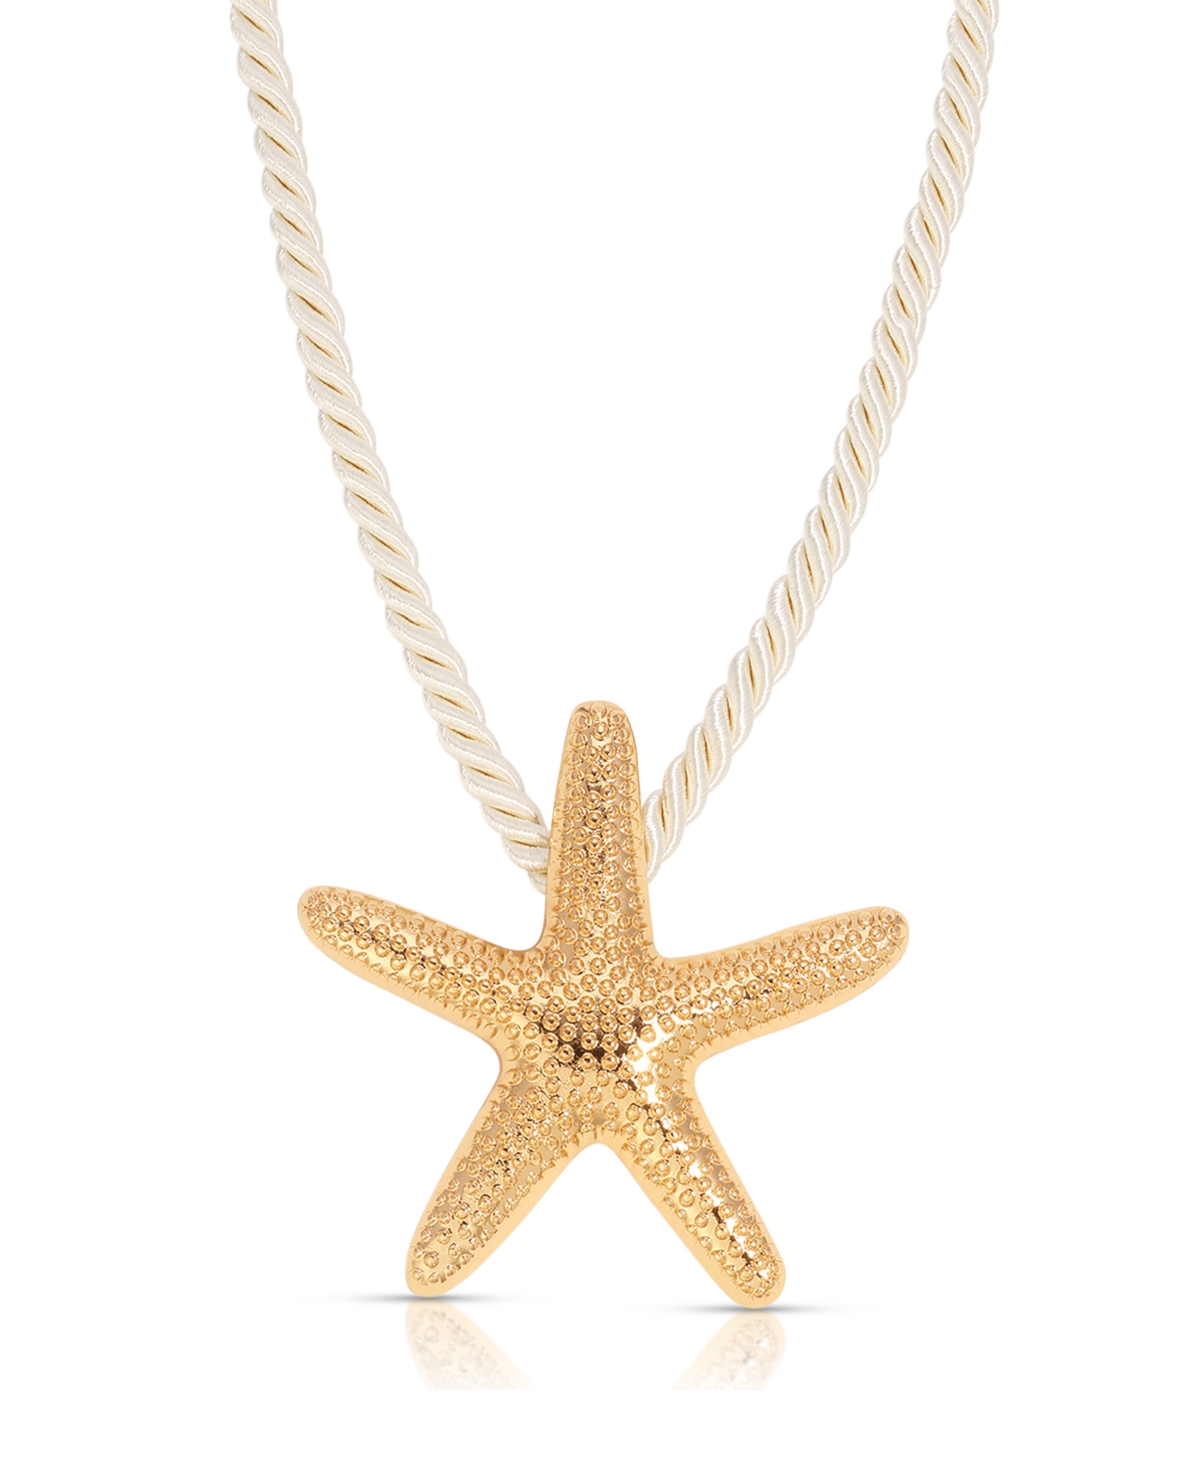 Silk Cord Starfish Pendant Necklace - Beige